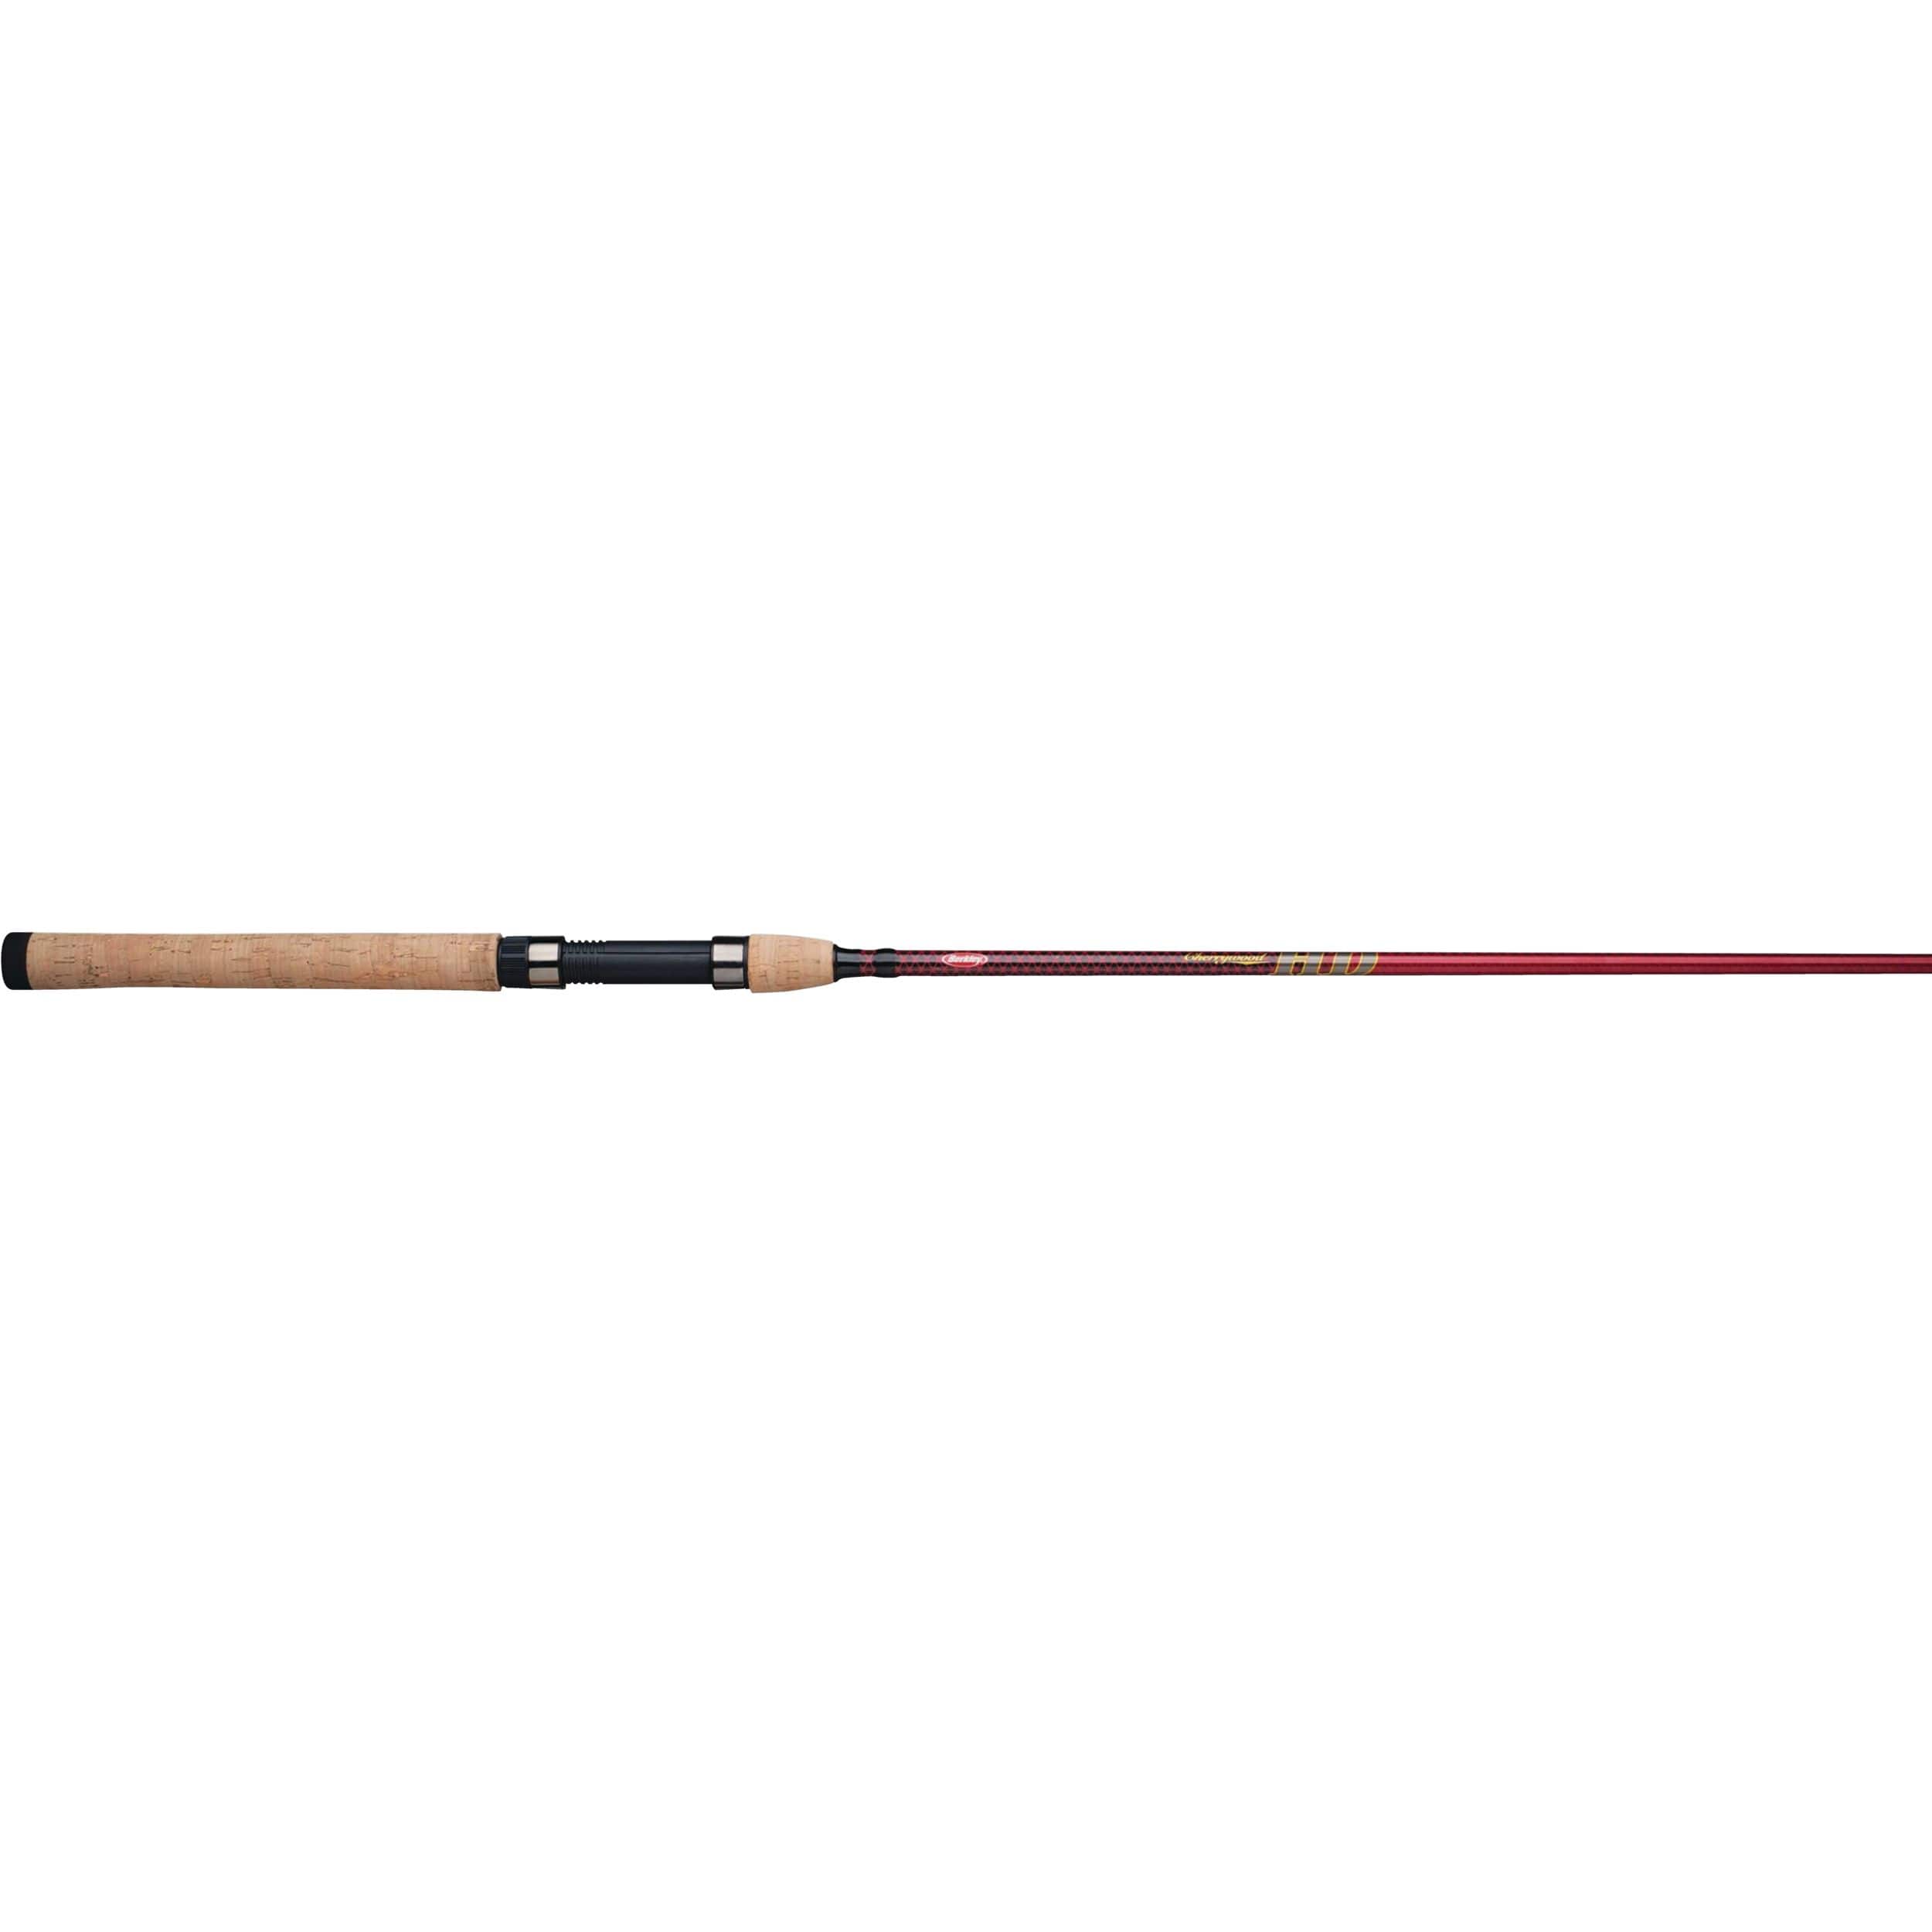 Berkley Cherrywood HD 2-pc Medium Spincast Fishing Rod, 6.5-ft